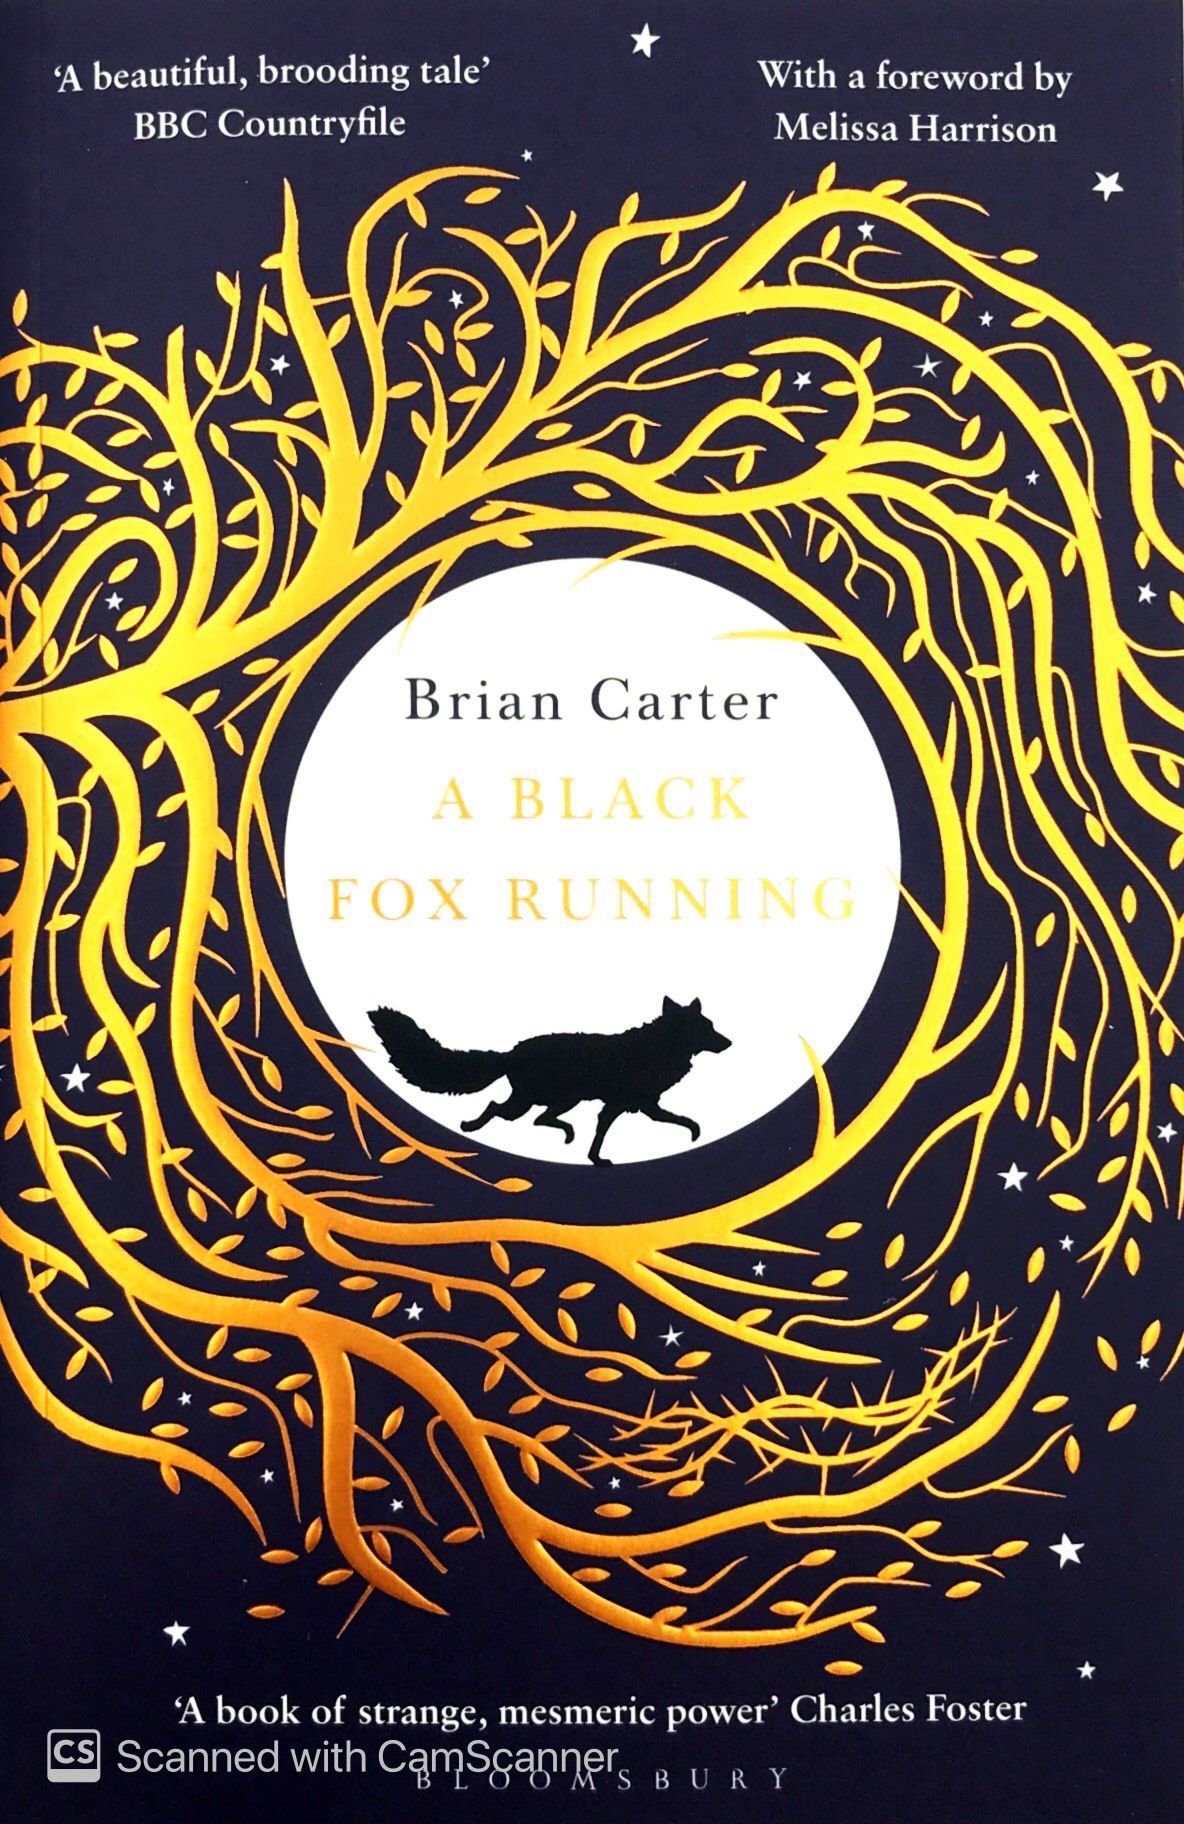 A Black Fox Running by Brian Carter